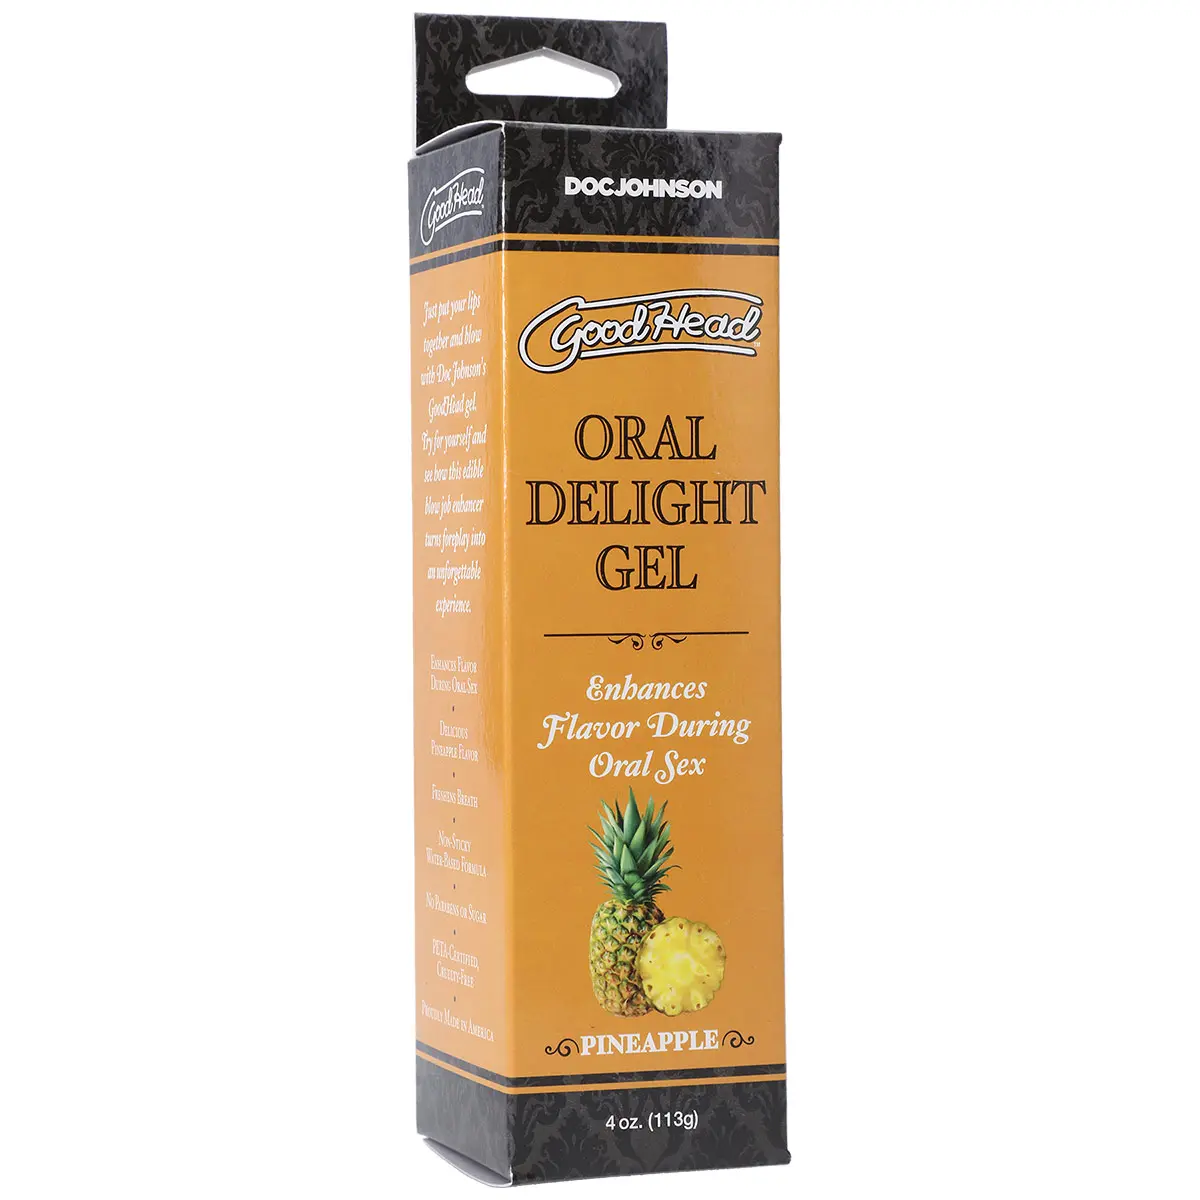 1. Doc Johnson - GoodHead - Oral Delight Gel - Pineapple - 4 oz